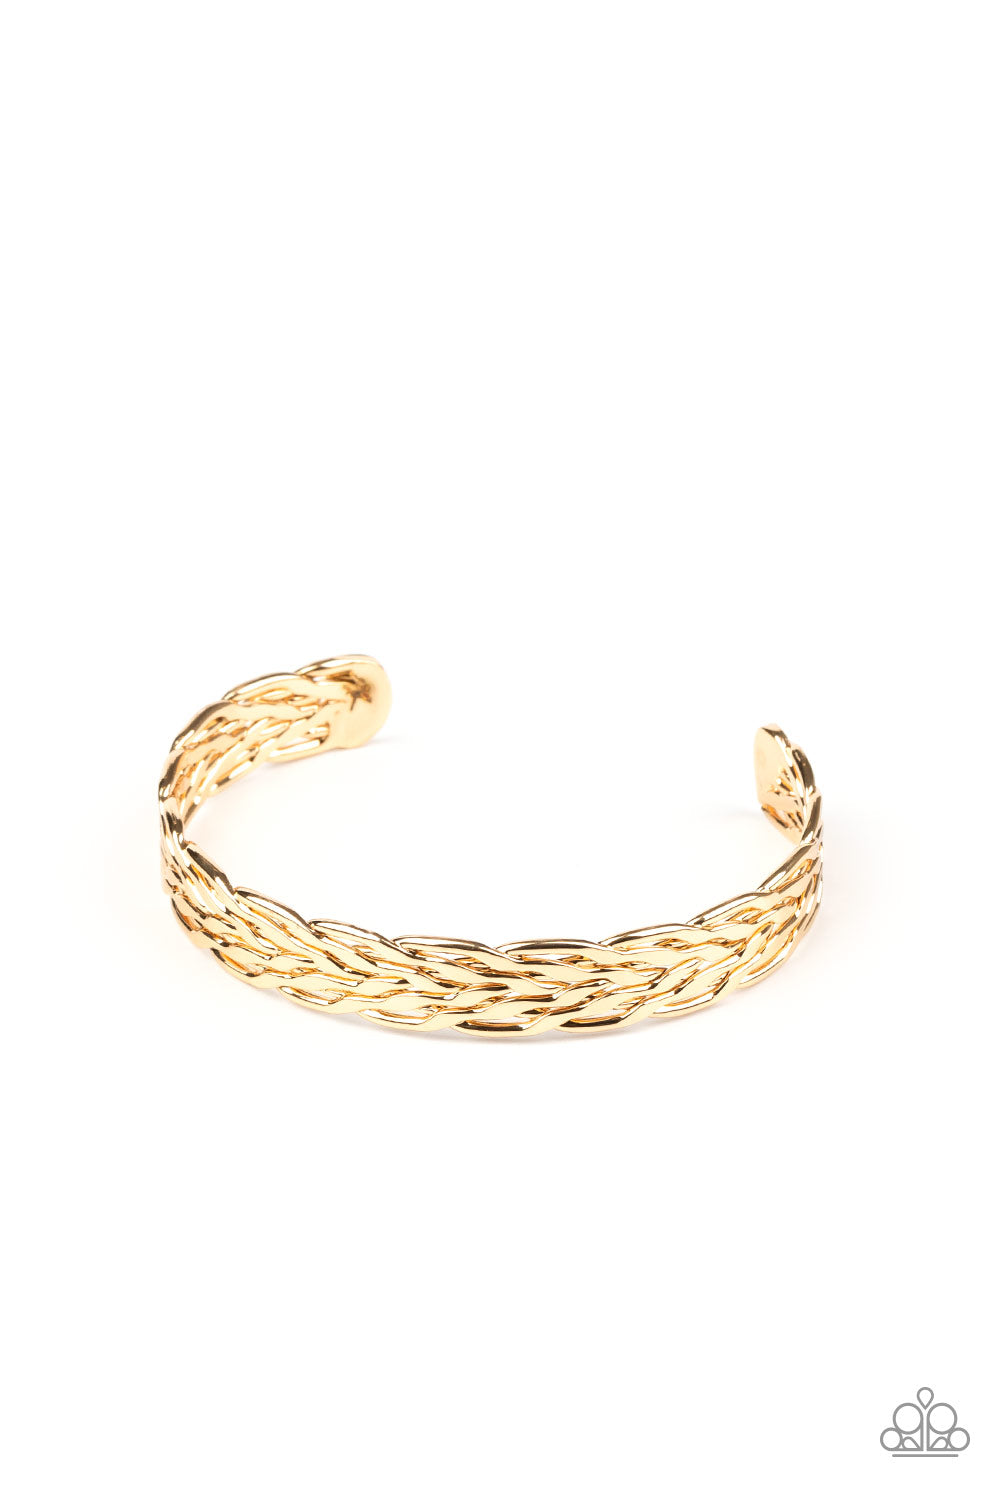 Magnetic Maven - Gold Cuff Bracelet - Paparazzi